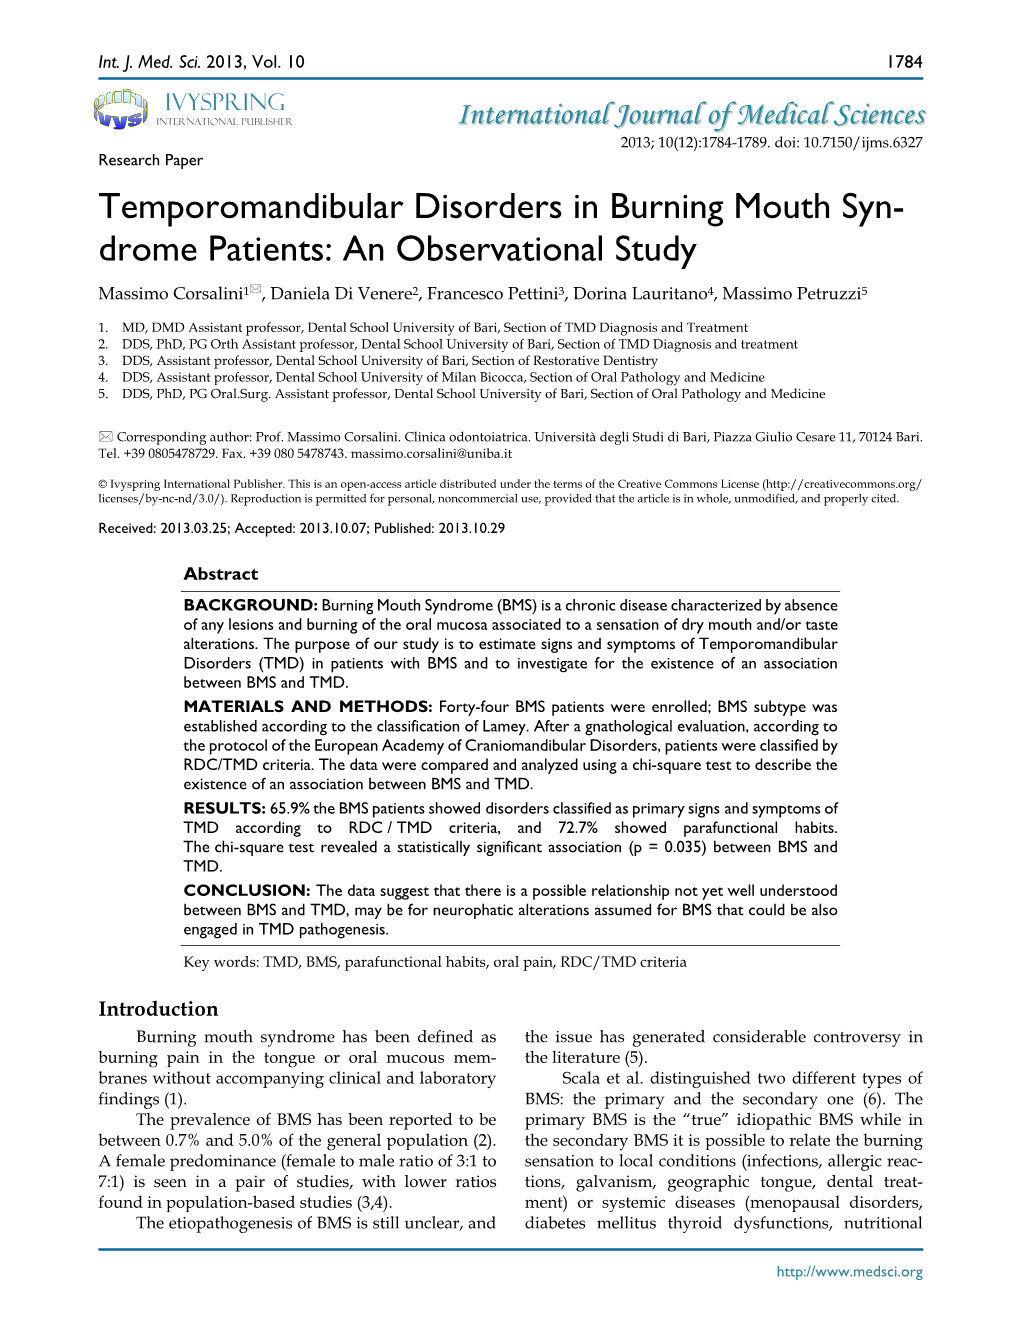 Temporomandibular Disorders in Burning Mouth Syn- Drome Patients